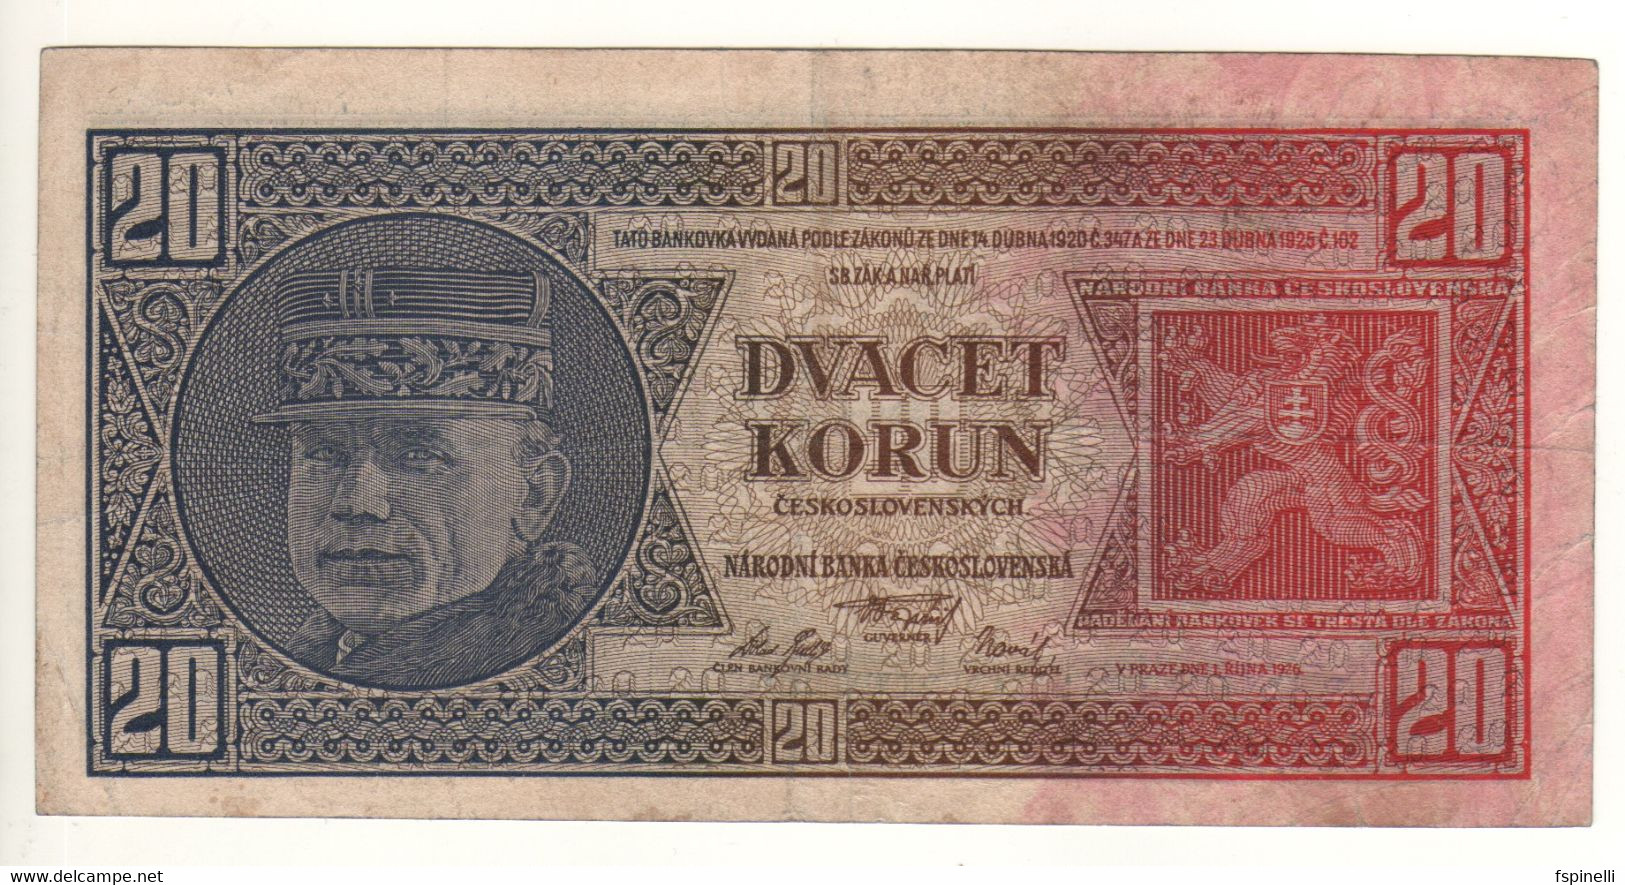 CZECHOSLOVAKIA   20 Korun   P21a    (1926  - General Milan Rastislav Stefánik / Dr. Alois Rasin ) - Checoslovaquia